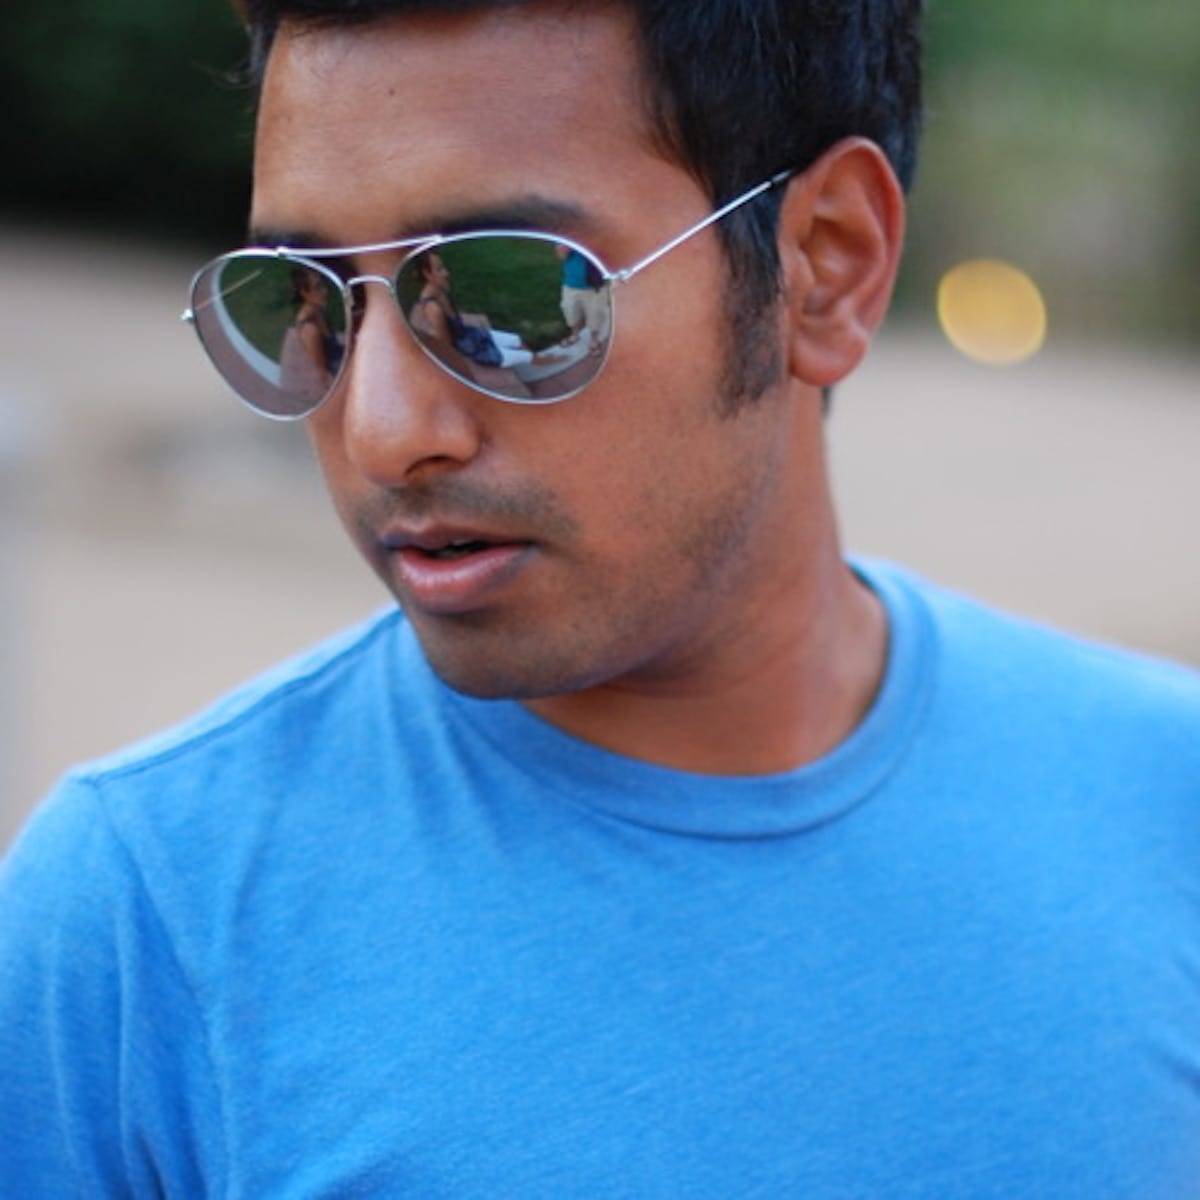 Man wearing sunglasses and a blue shirt.